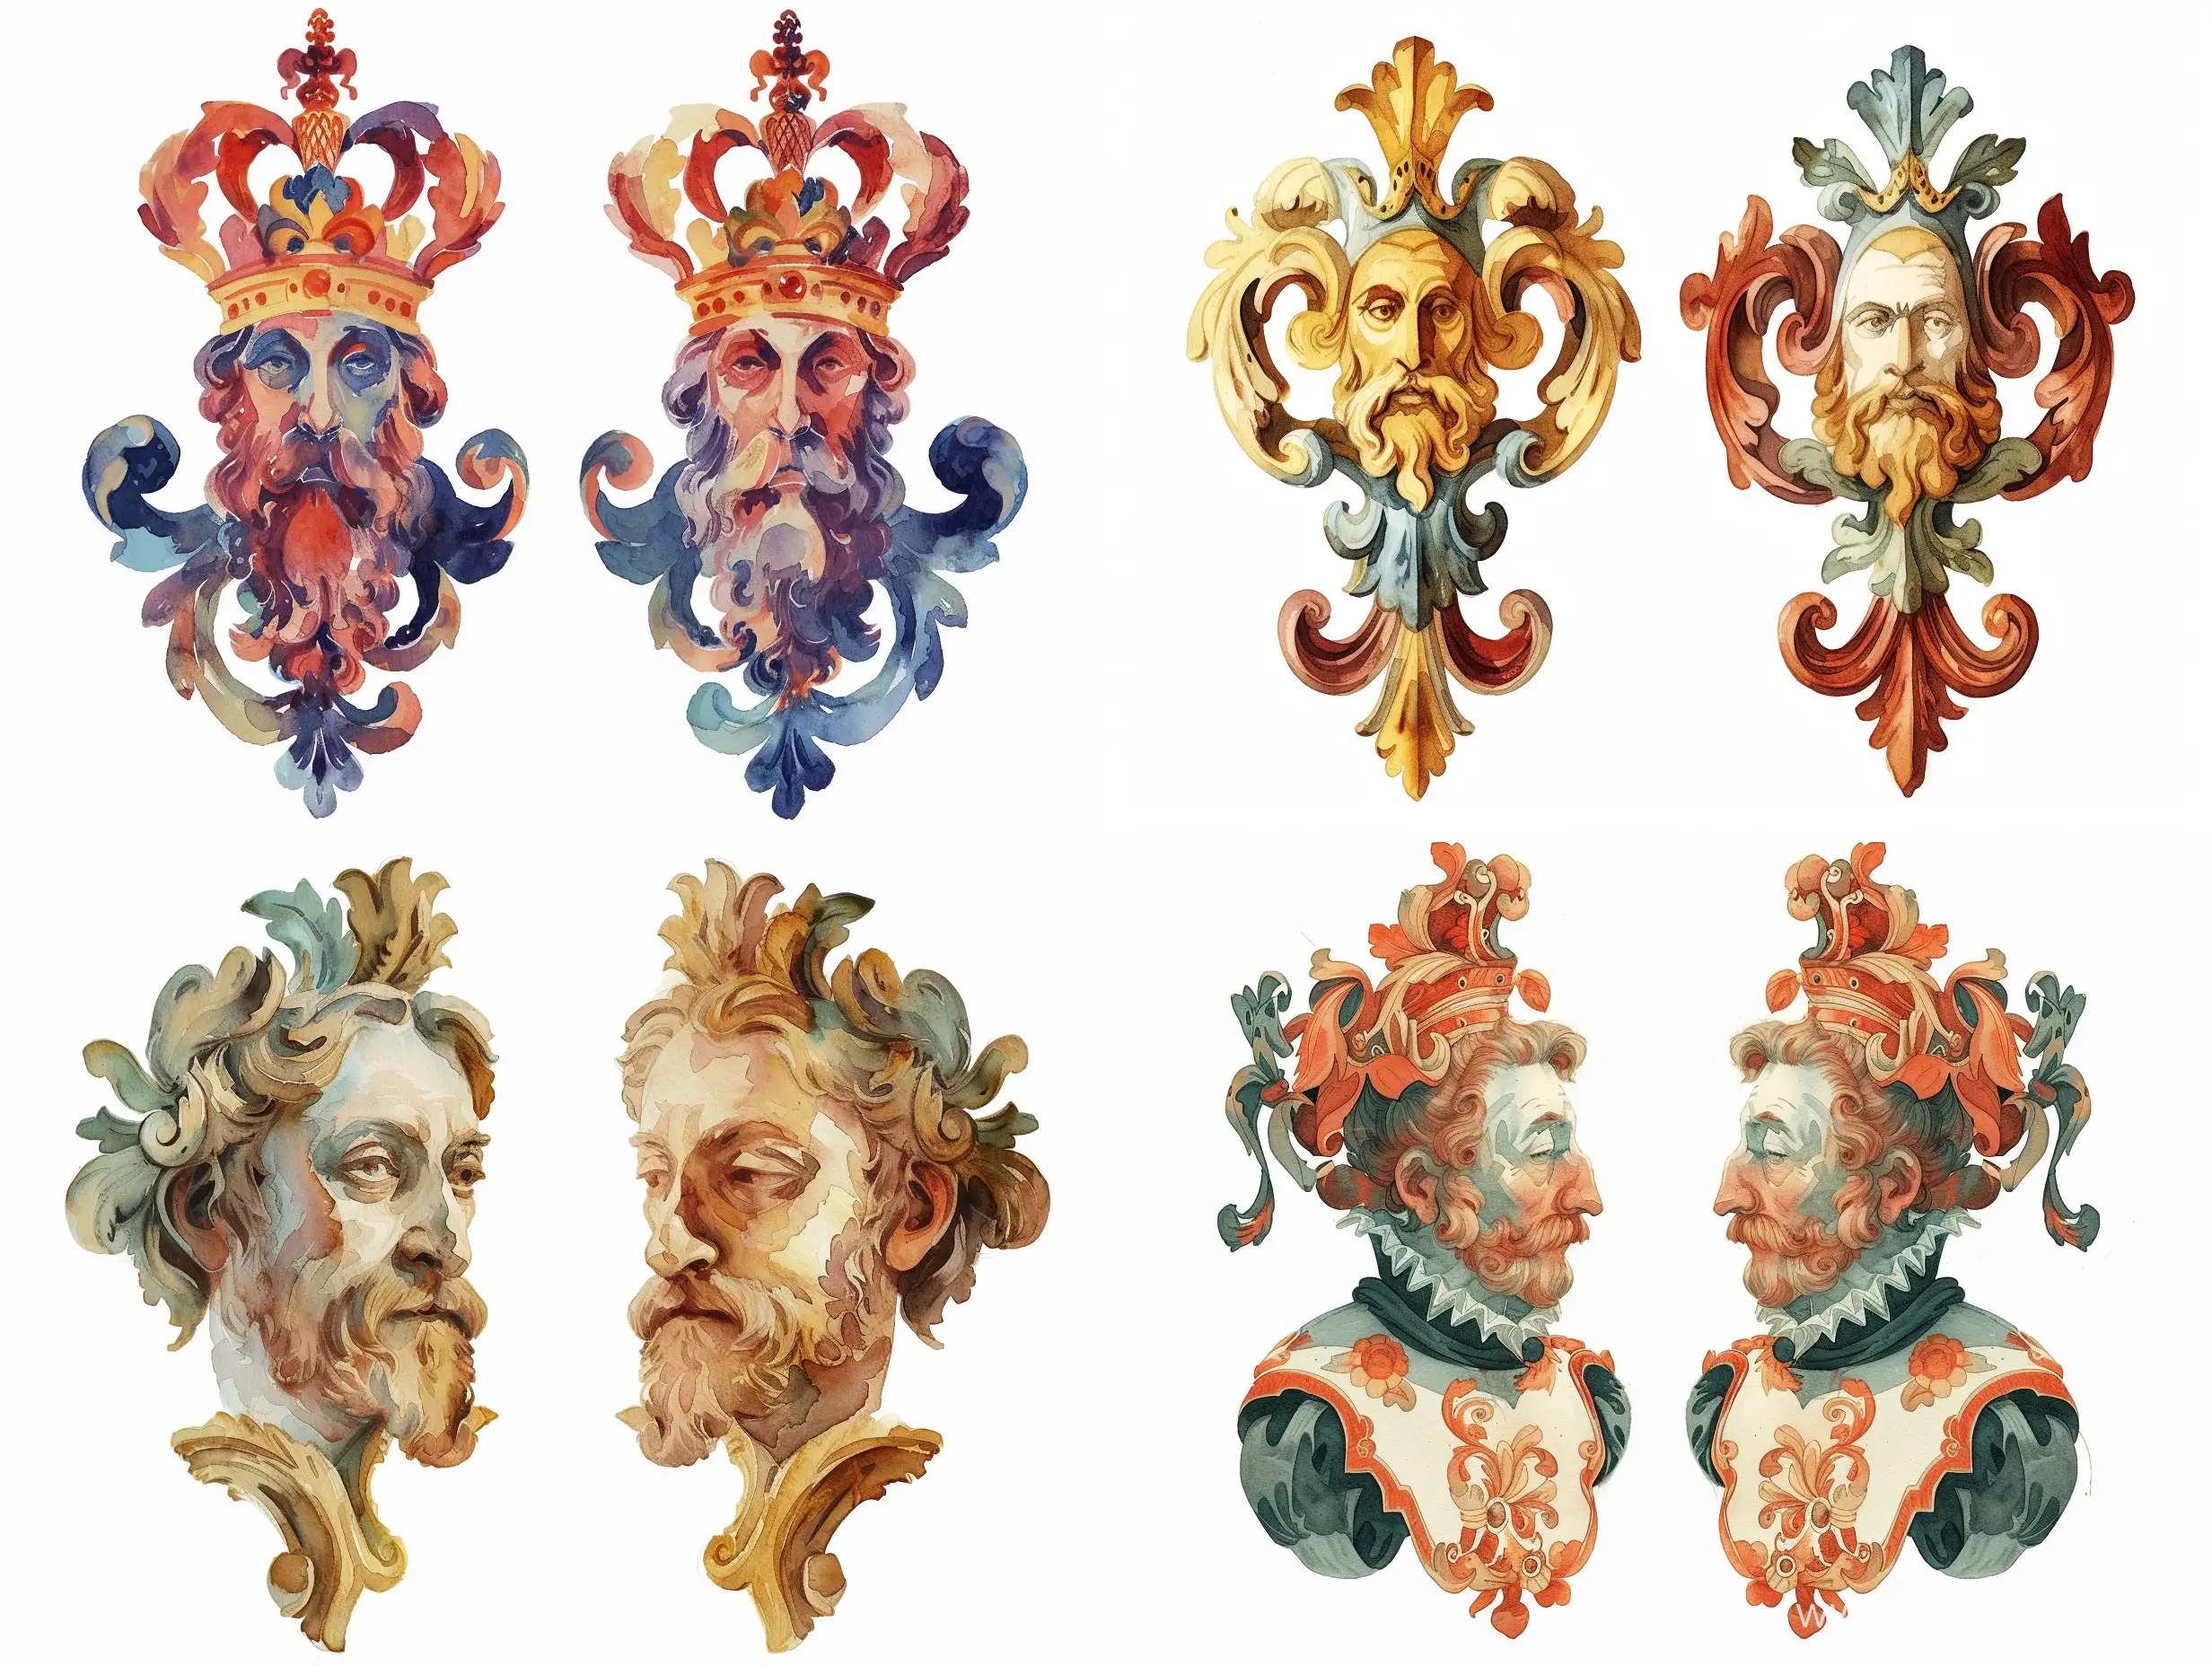 Renaissance-Kings-Man-Ornaments-Decorative-Watercolor-Illustrations-in-James-Christensen-Style